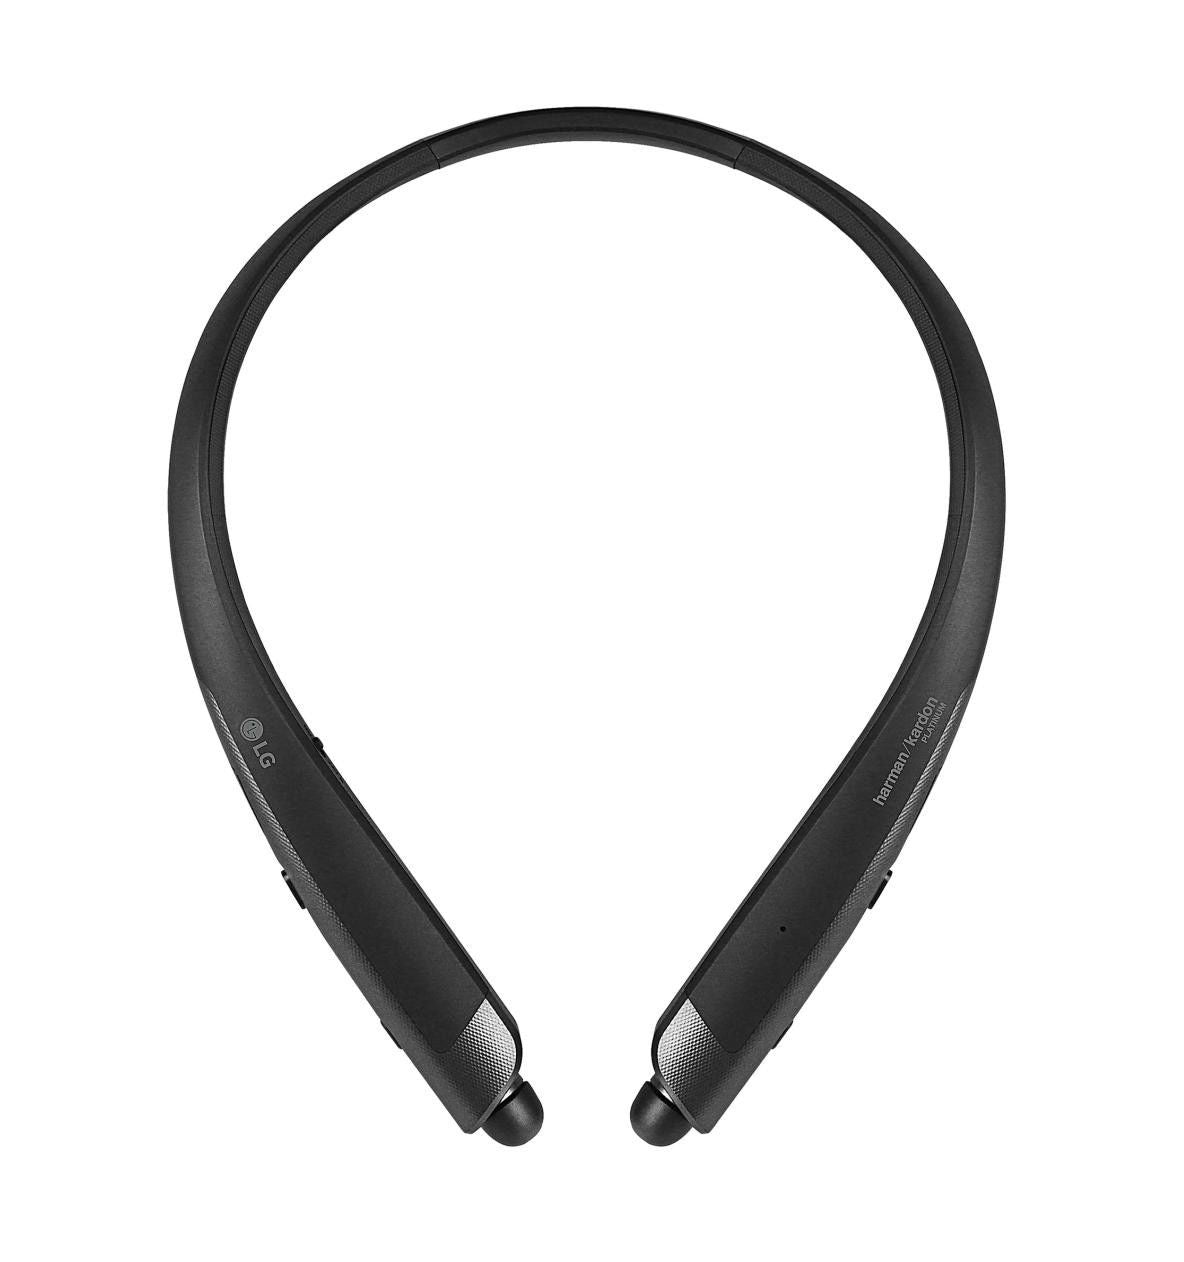 LG HBS-1120 TONE Platinum SE Bluetooth Wireless Stereo Headset - Black (Refurbished)